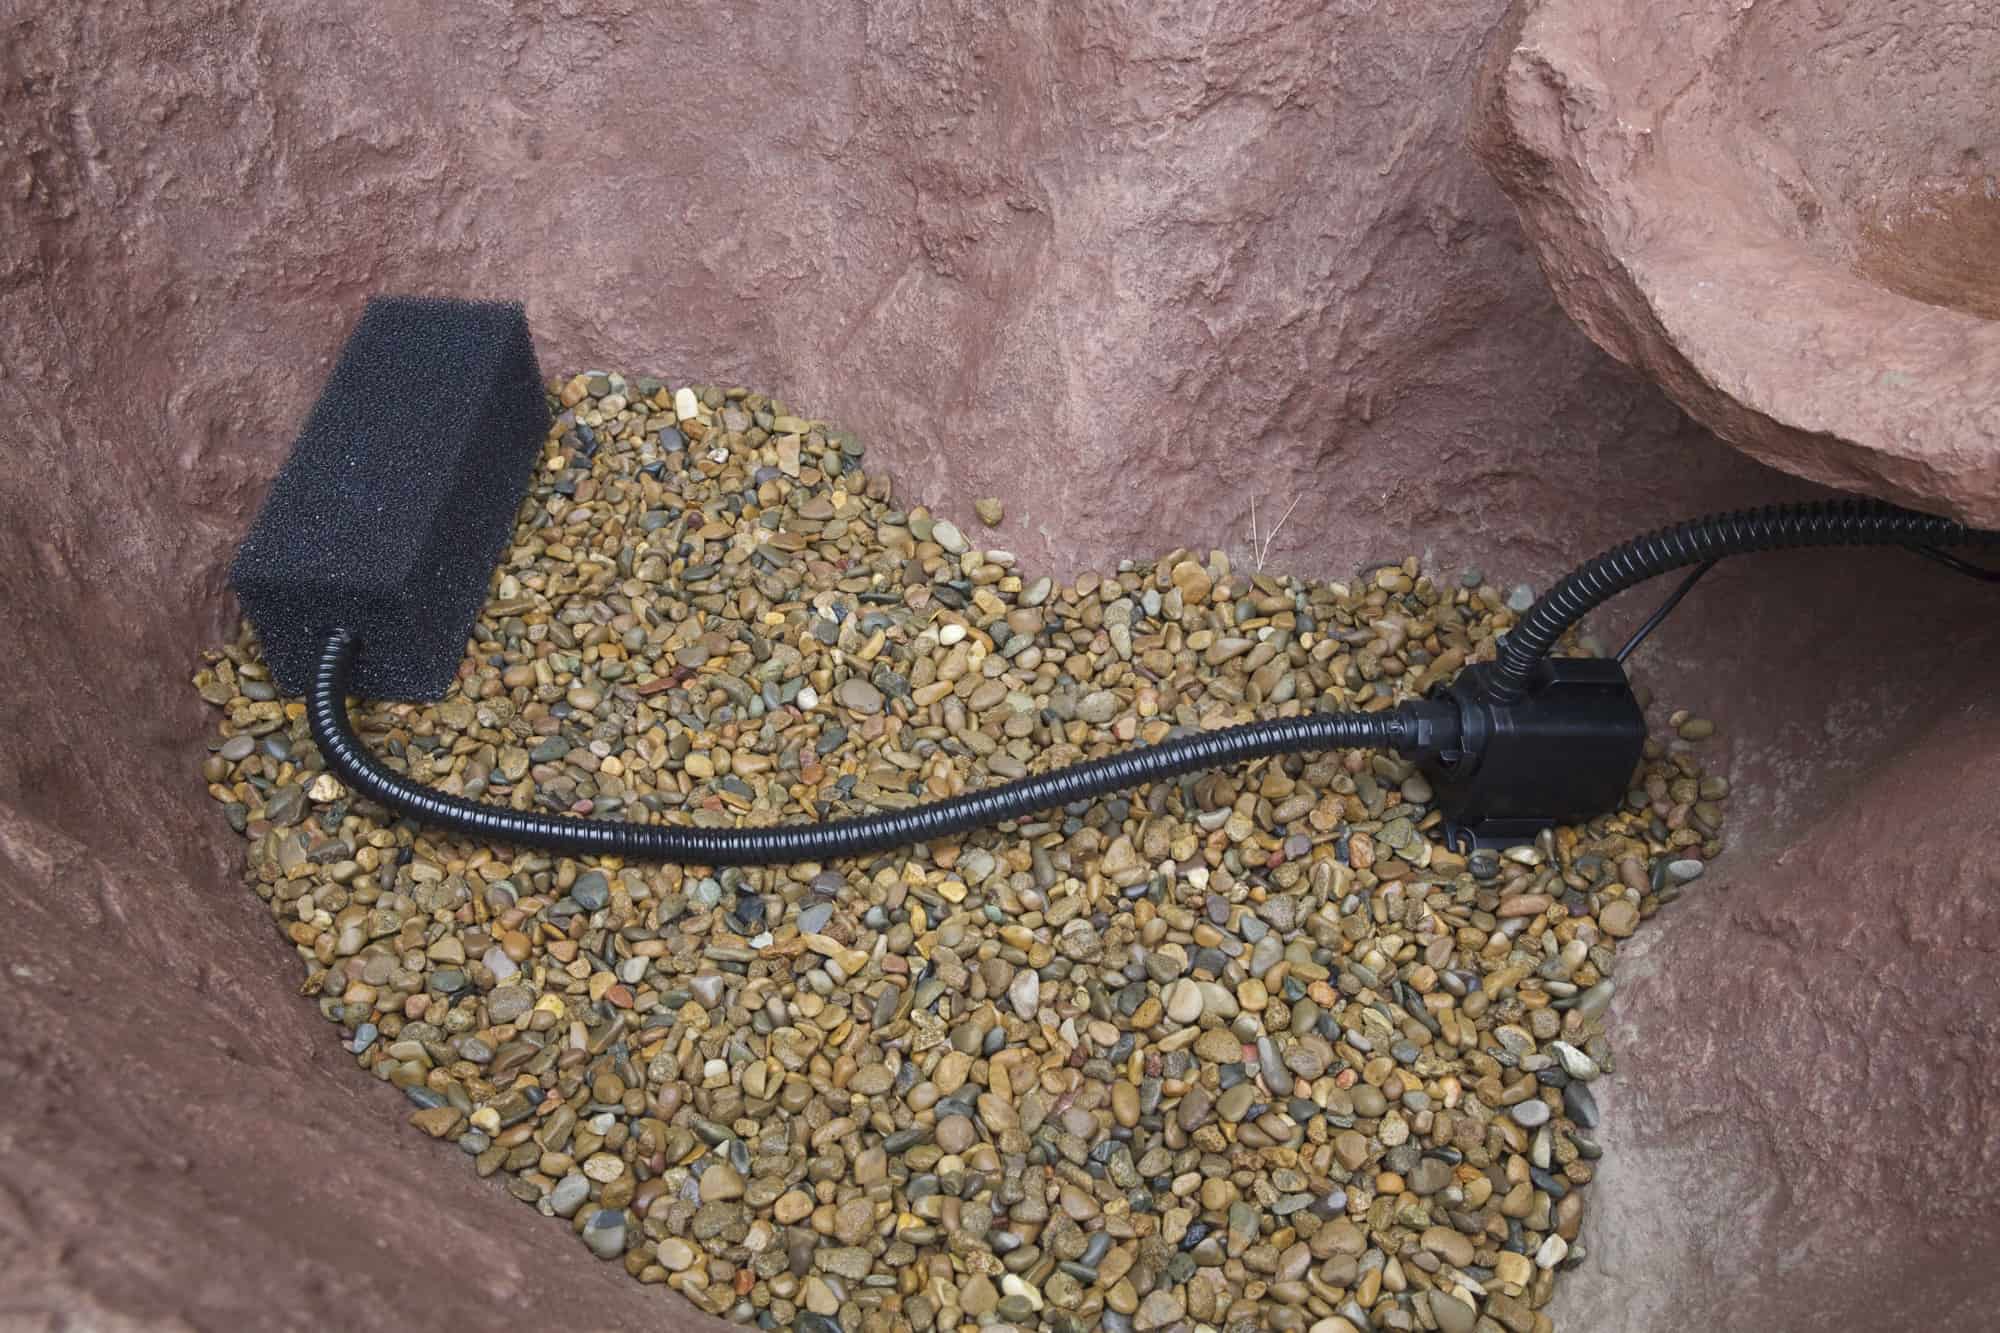 AQUAPRO Rock Look Pond Installation - Set up pump